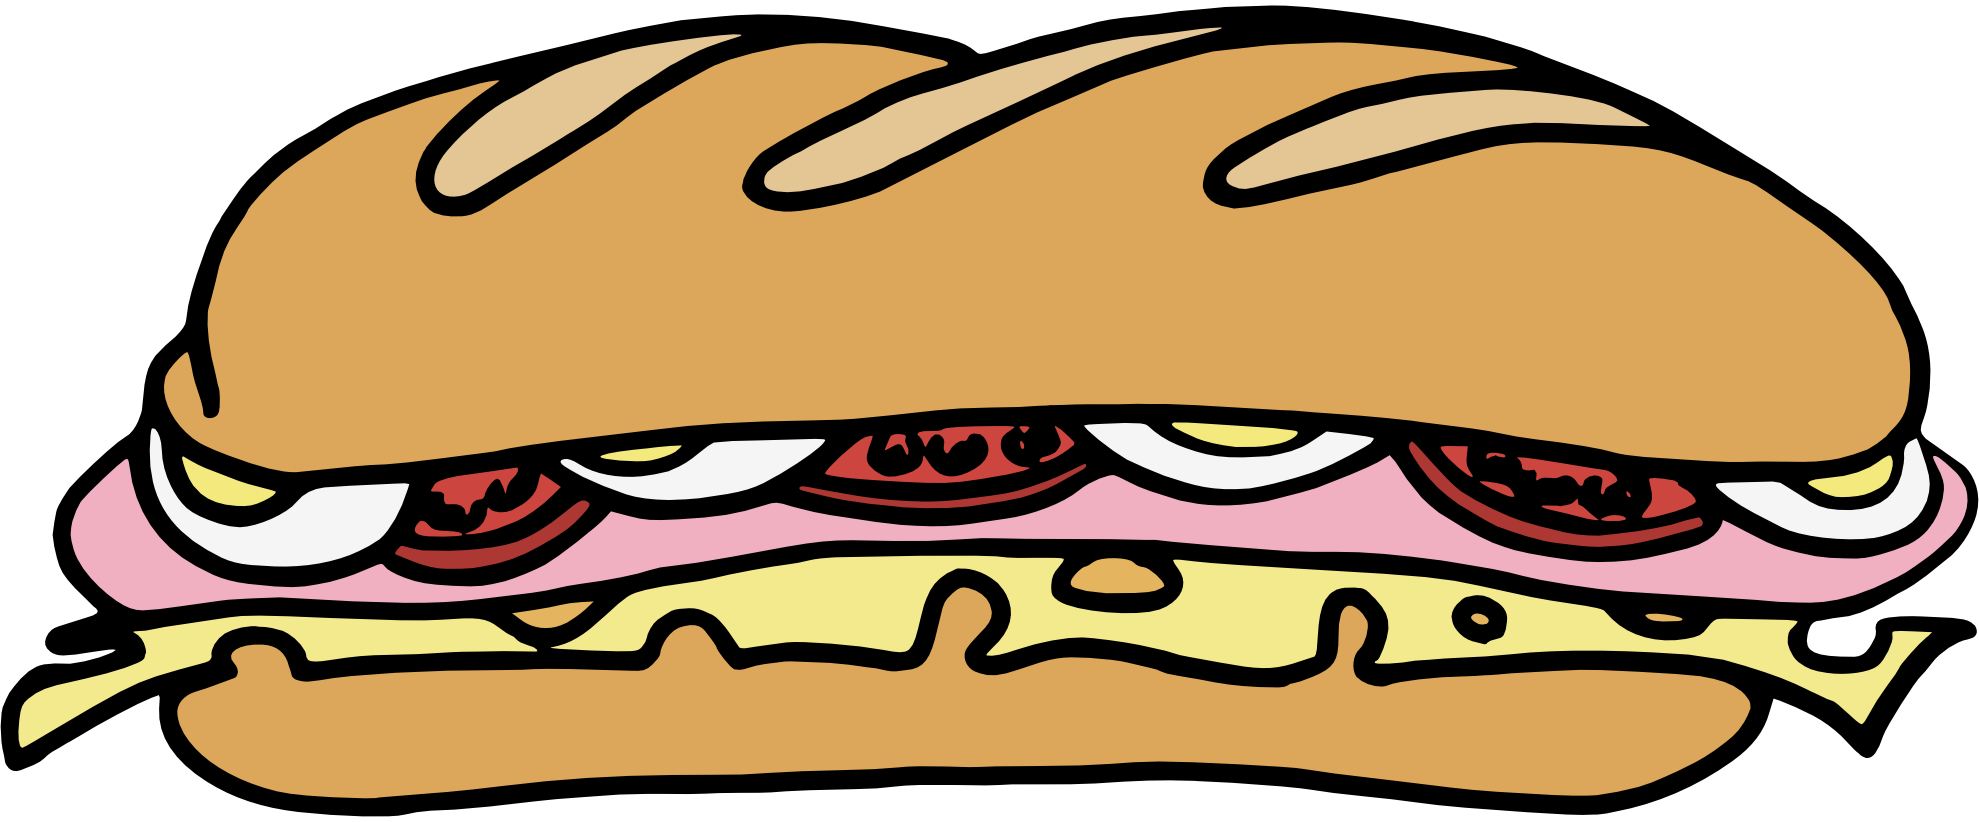 sandwich%20clipart